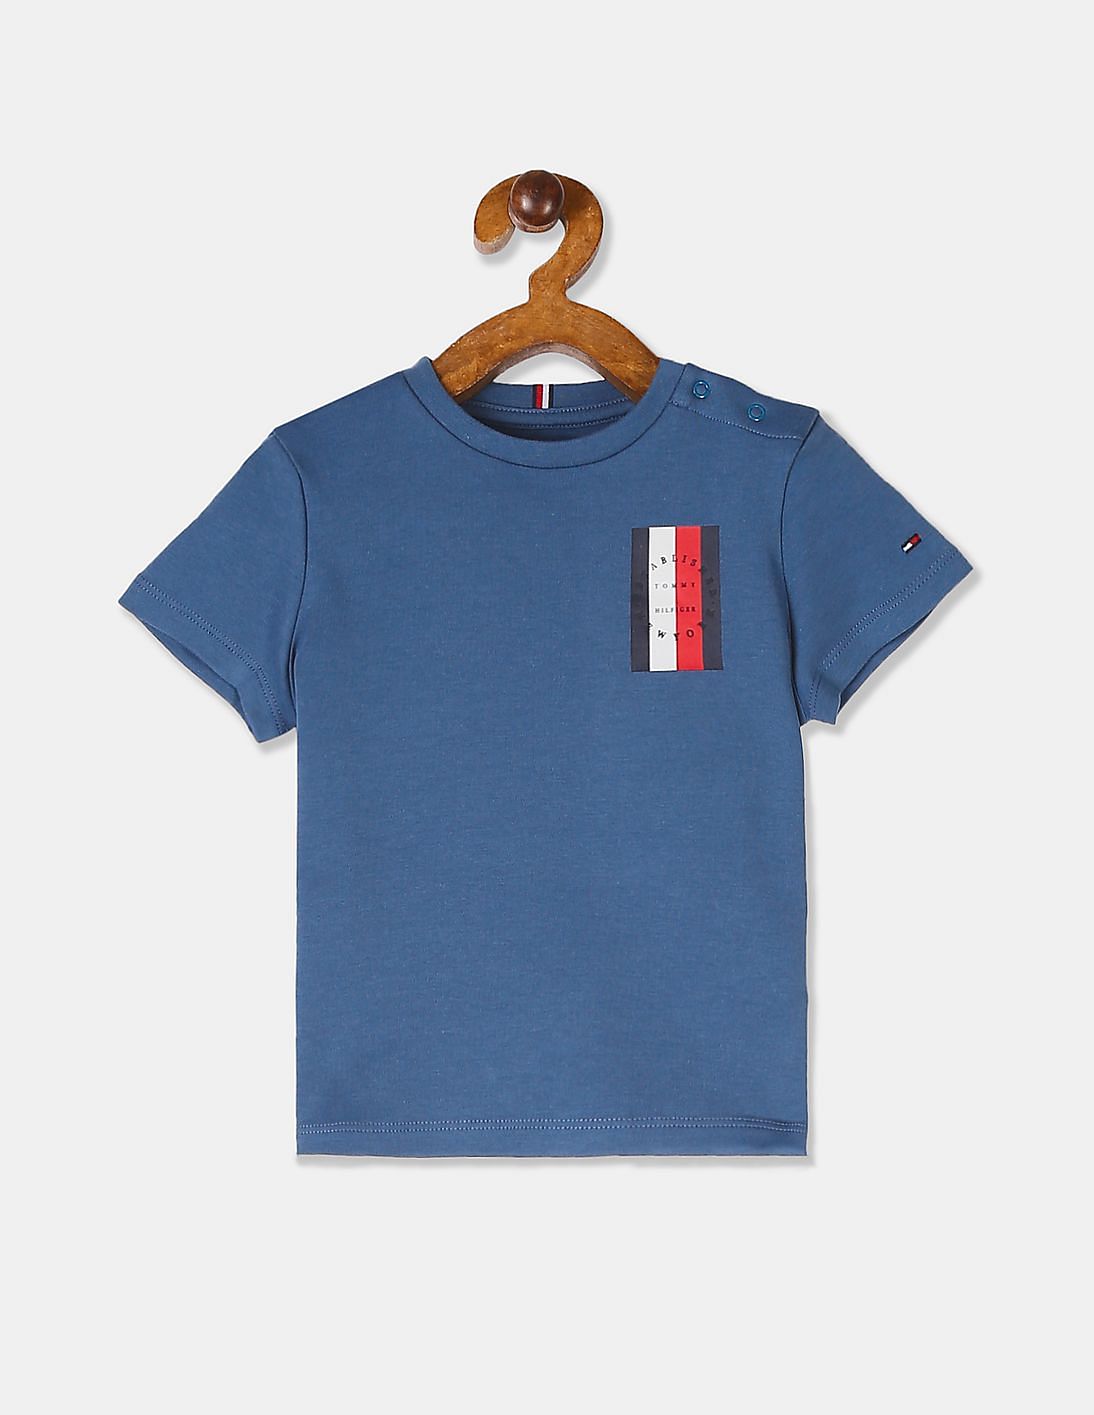 Buy Tommy Hilfiger Kids Boys Blue Round Neck Solid T-Shirt - NNNOW.com